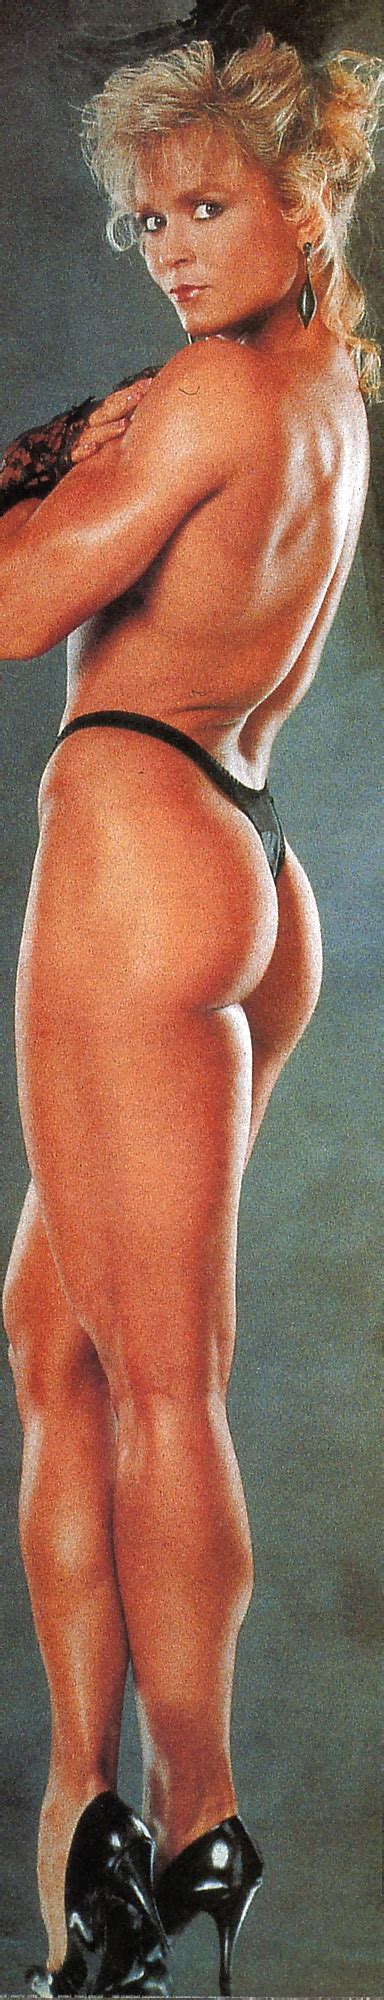 Tonya Knight Retro Female Muscle 65 Pics 2 Xhamster